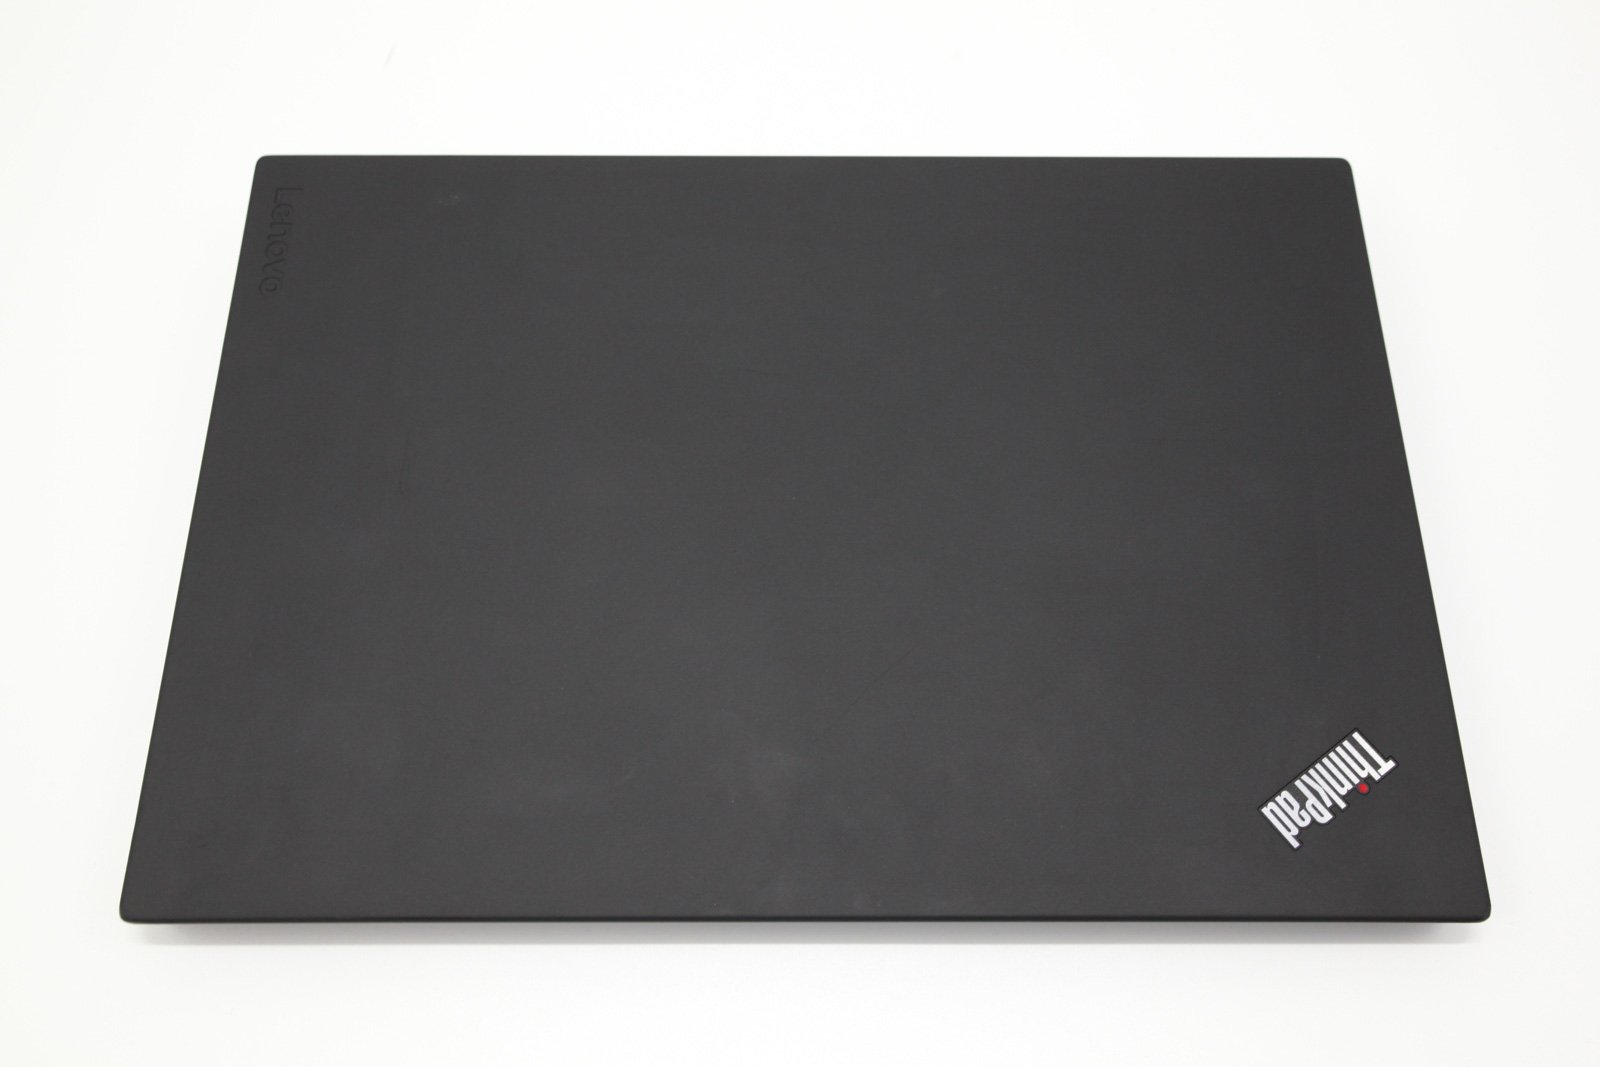 Lenovo ThinkPad P52s CAD Laptop: i7-8550U 16GB RAM 256GB NVIDIA Quadro Warranty - CruiseTech